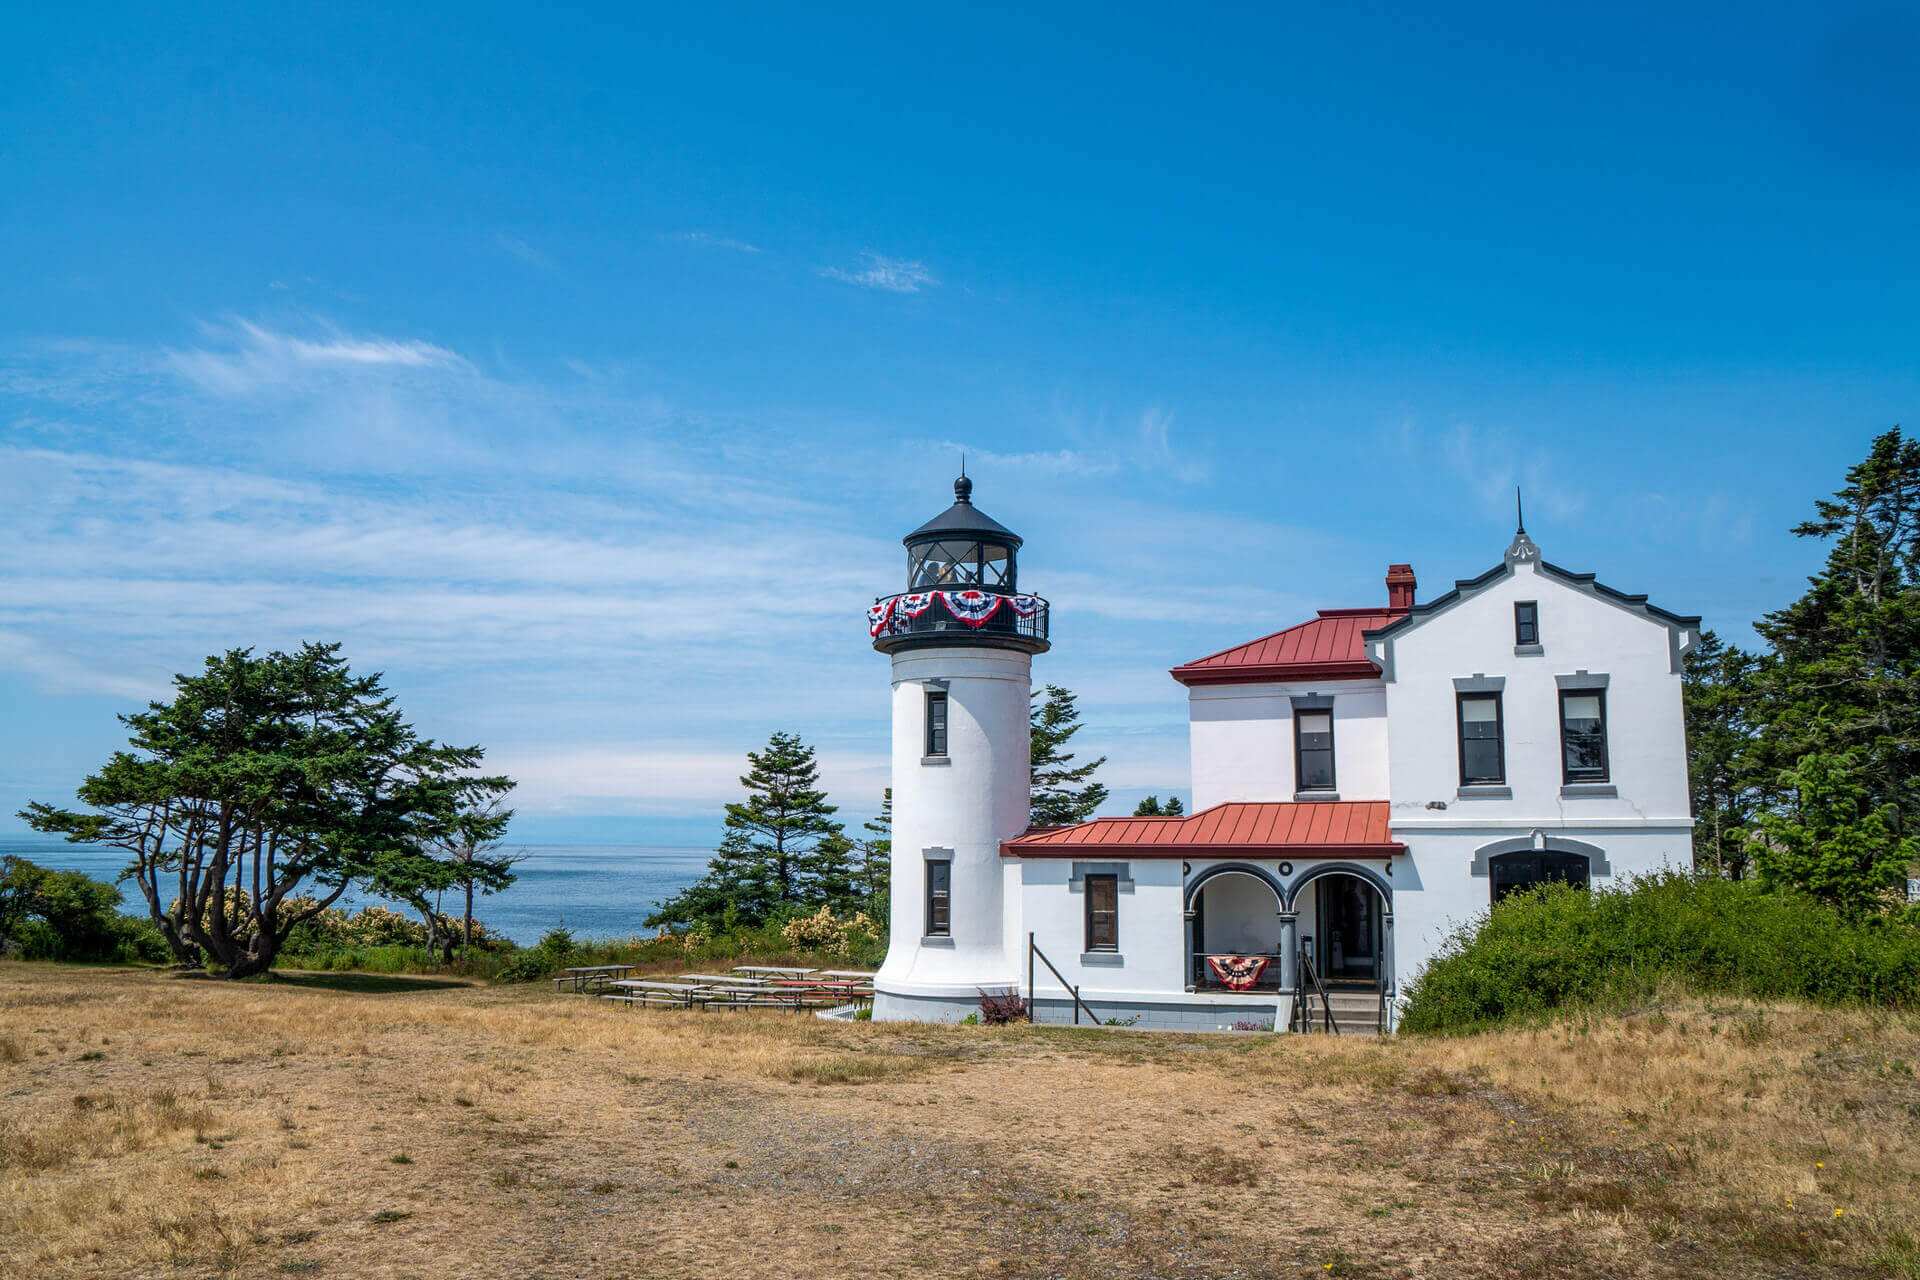 Admiralty Head Lighthouse in Washington